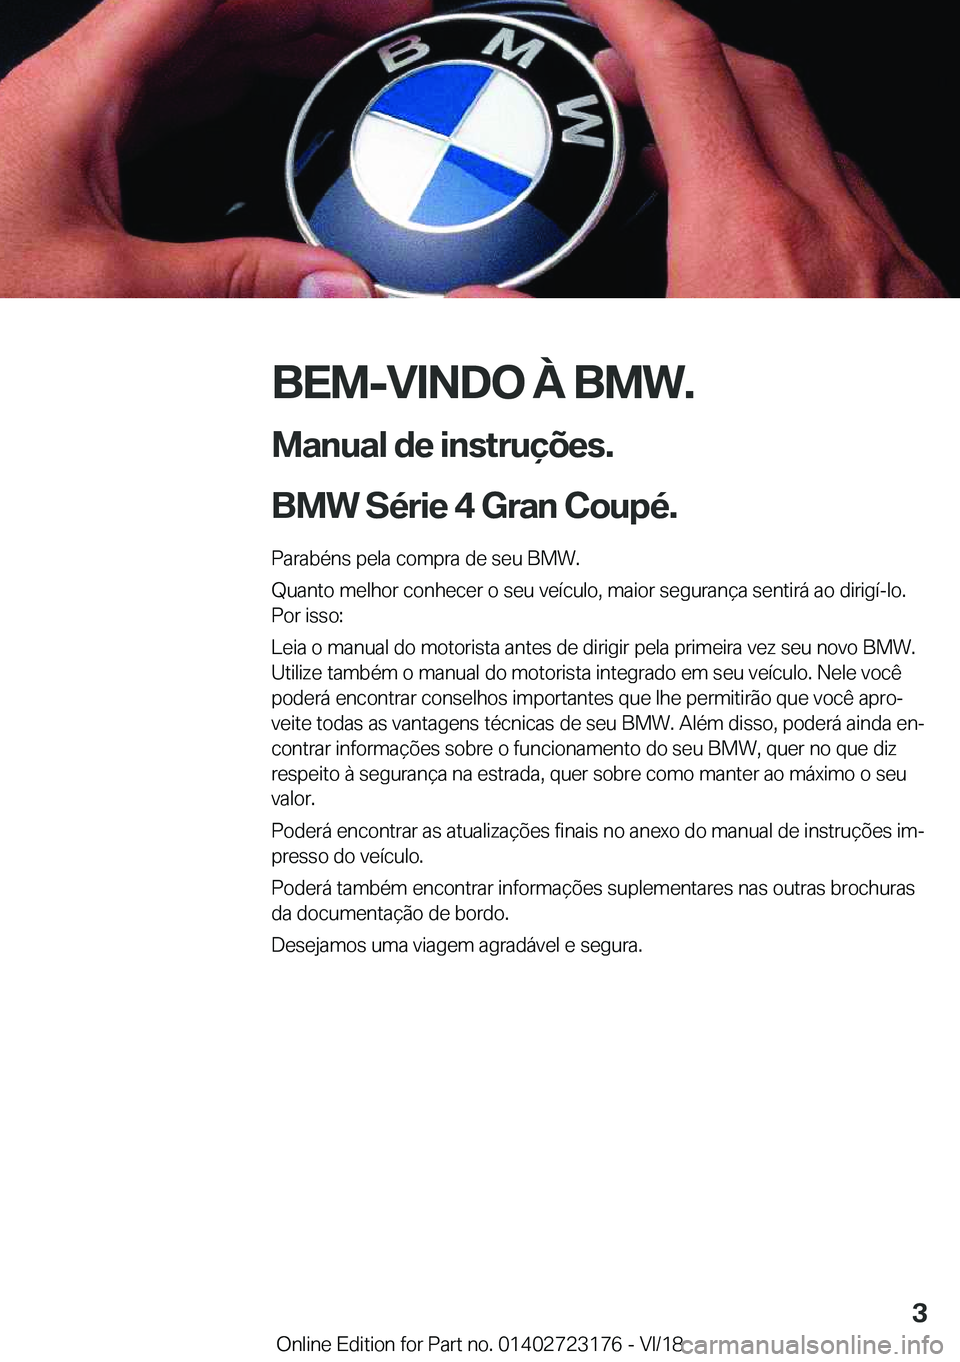 BMW 4 SERIES COUPE 2019  Manual do condutor (in Portuguese) �B�E�M�-�V�I�N�D�O��À��B�M�W�.
�M�a�n�u�a�l��d�e��i�n�s�t�r�u�